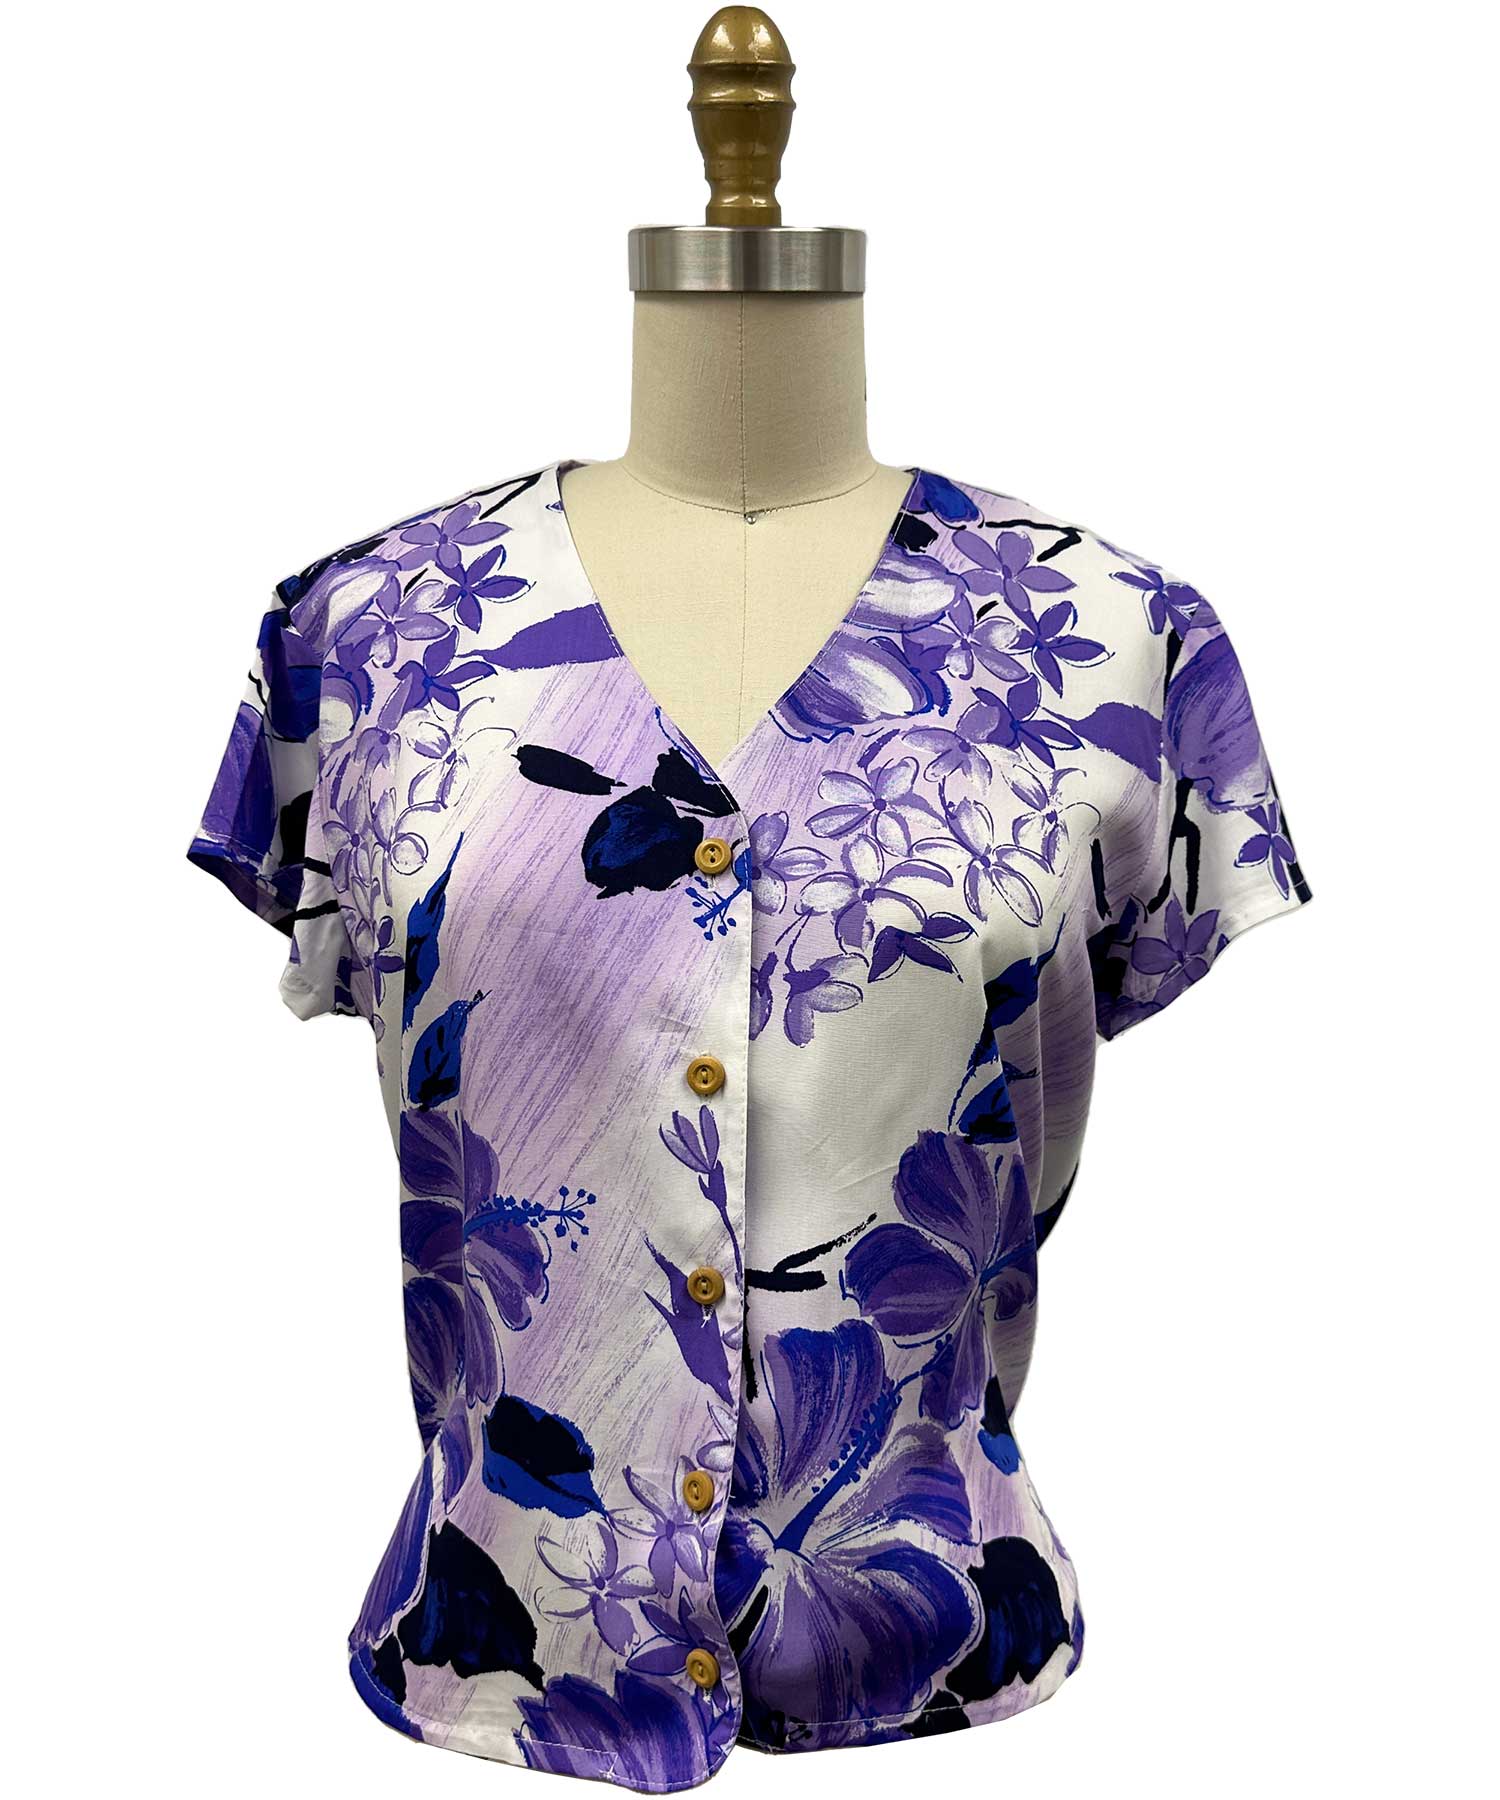 Women's Purple Hawaiian Shirts with Hibiscus Flowers